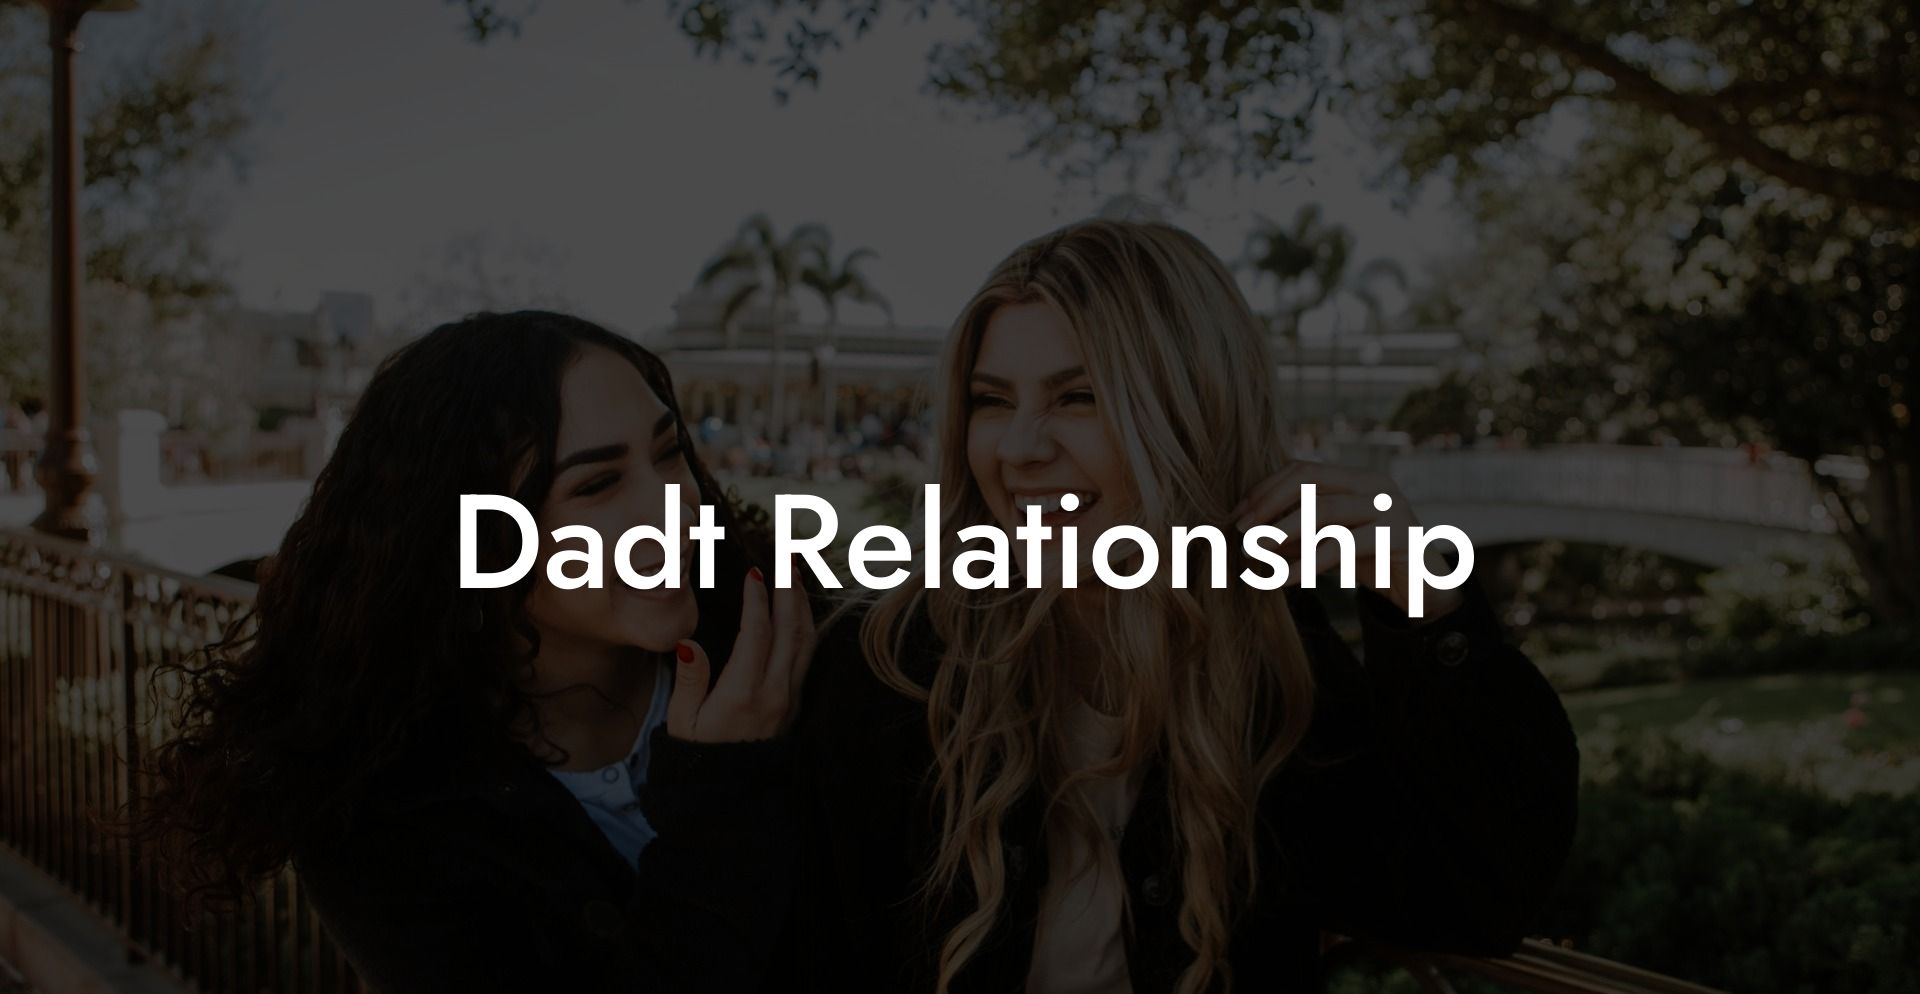 Dadt Relationship